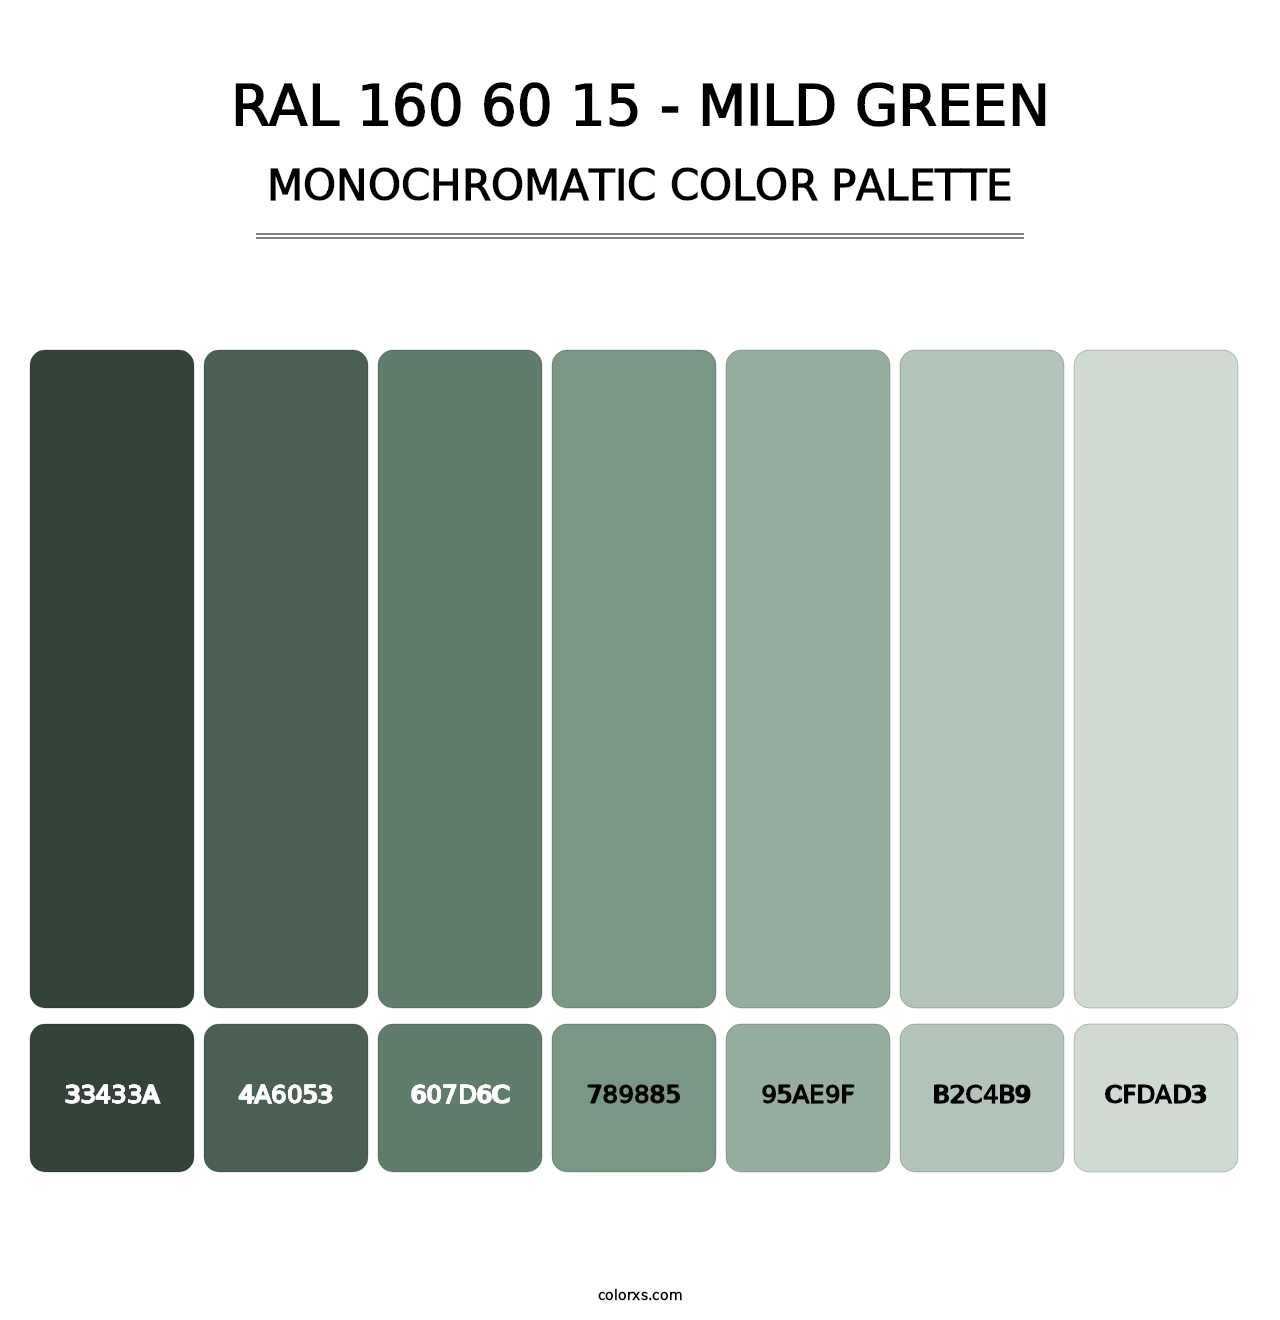 RAL 160 60 15 - Mild Green - Monochromatic Color Palette